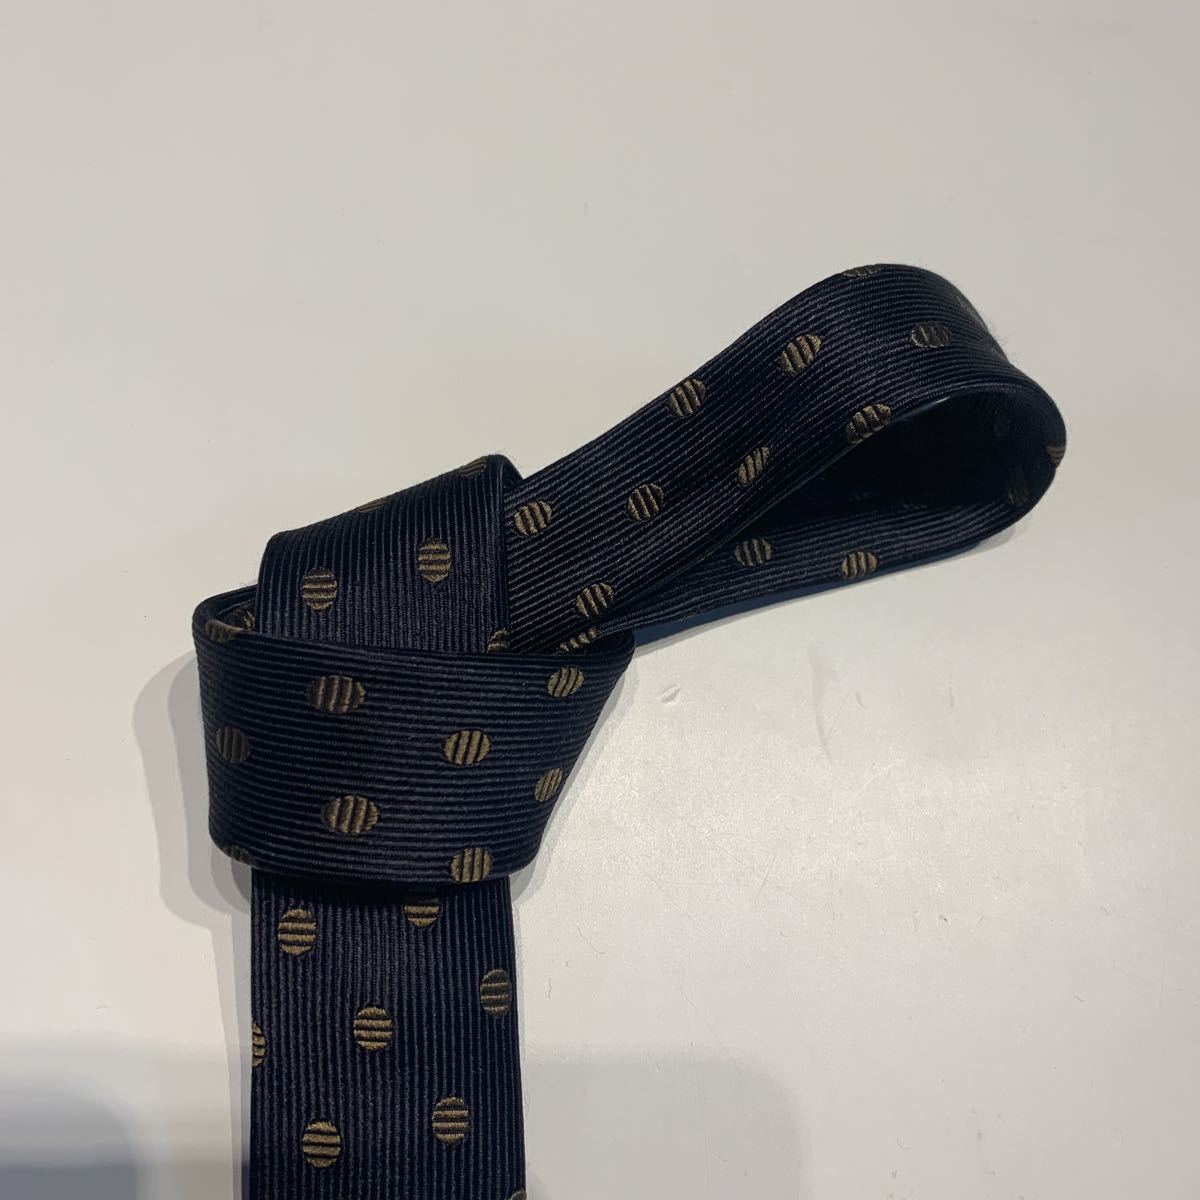  approximately 2 ten thousand jpy regular goods Dolce & Gabbana men's business casual narrow necktie DOLCE&GABBANA polka dot Italy made DG D&G necktie 